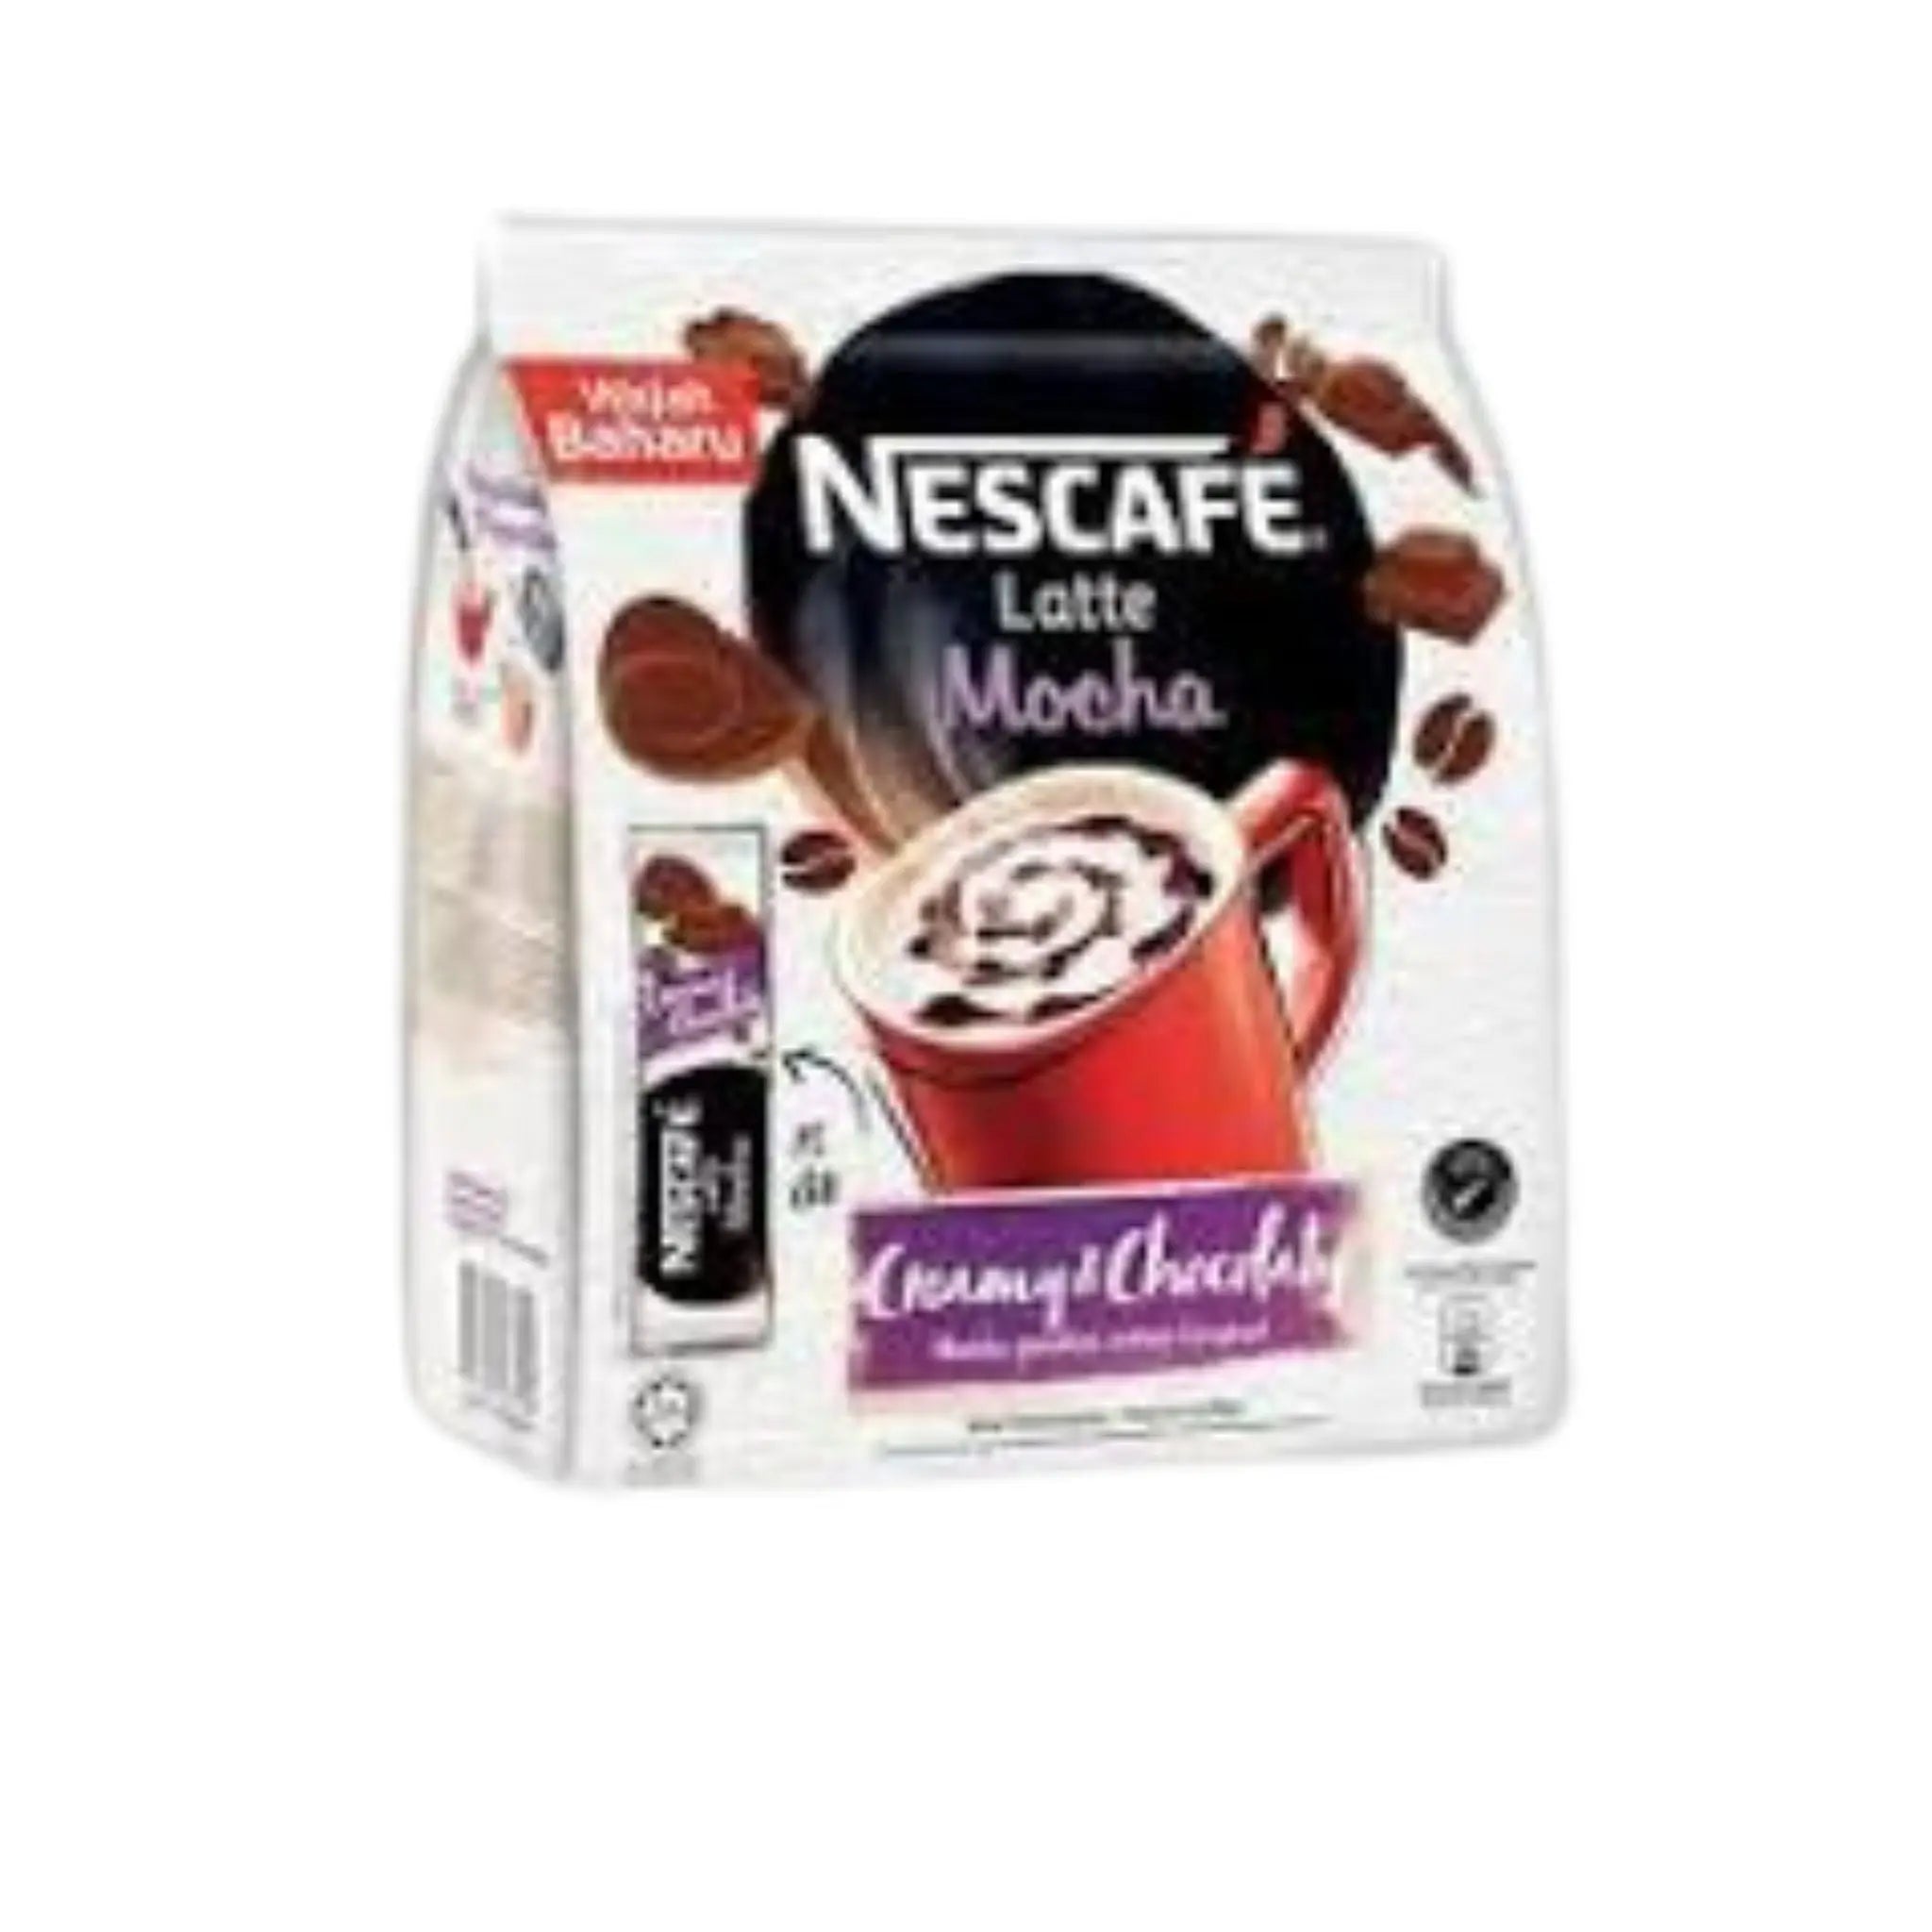 Nescafe 3in1 Latte Mocha - 24x15x31g (1 carton) - Marino.AE